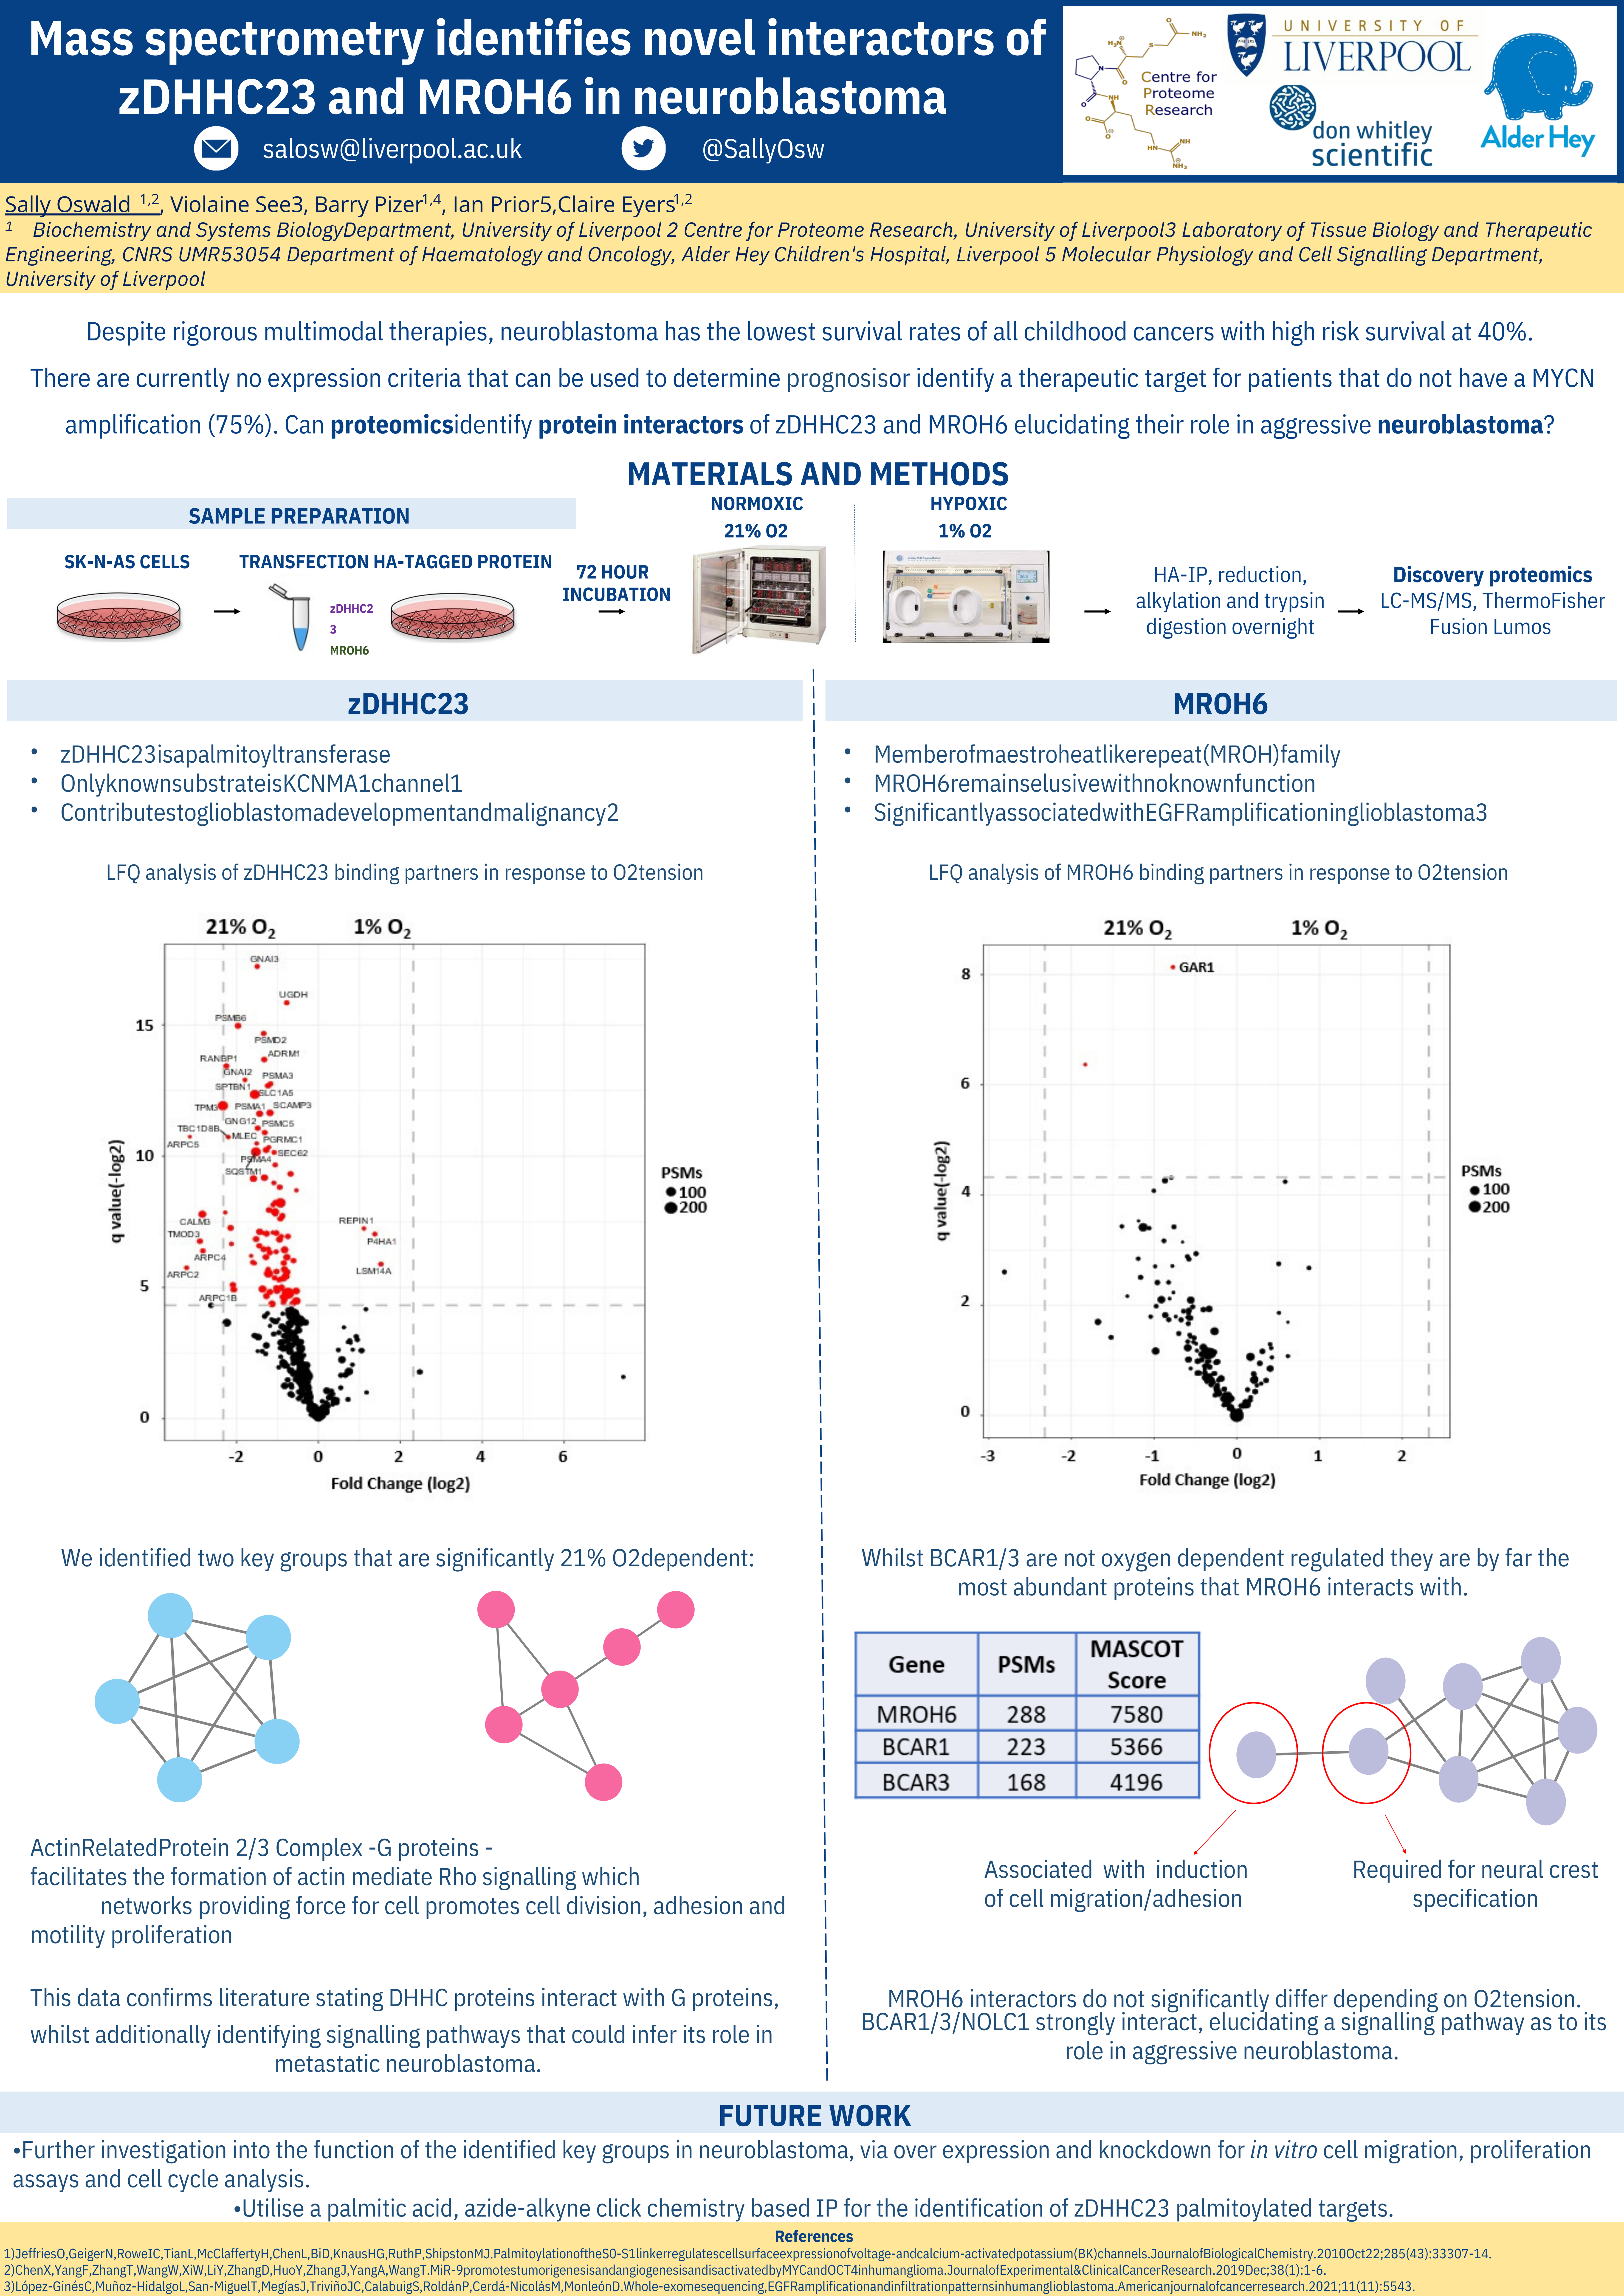 Poster: Mass spectrometry identifies novel interactors of zDHHC23 and MROH6 in neuroblastoma